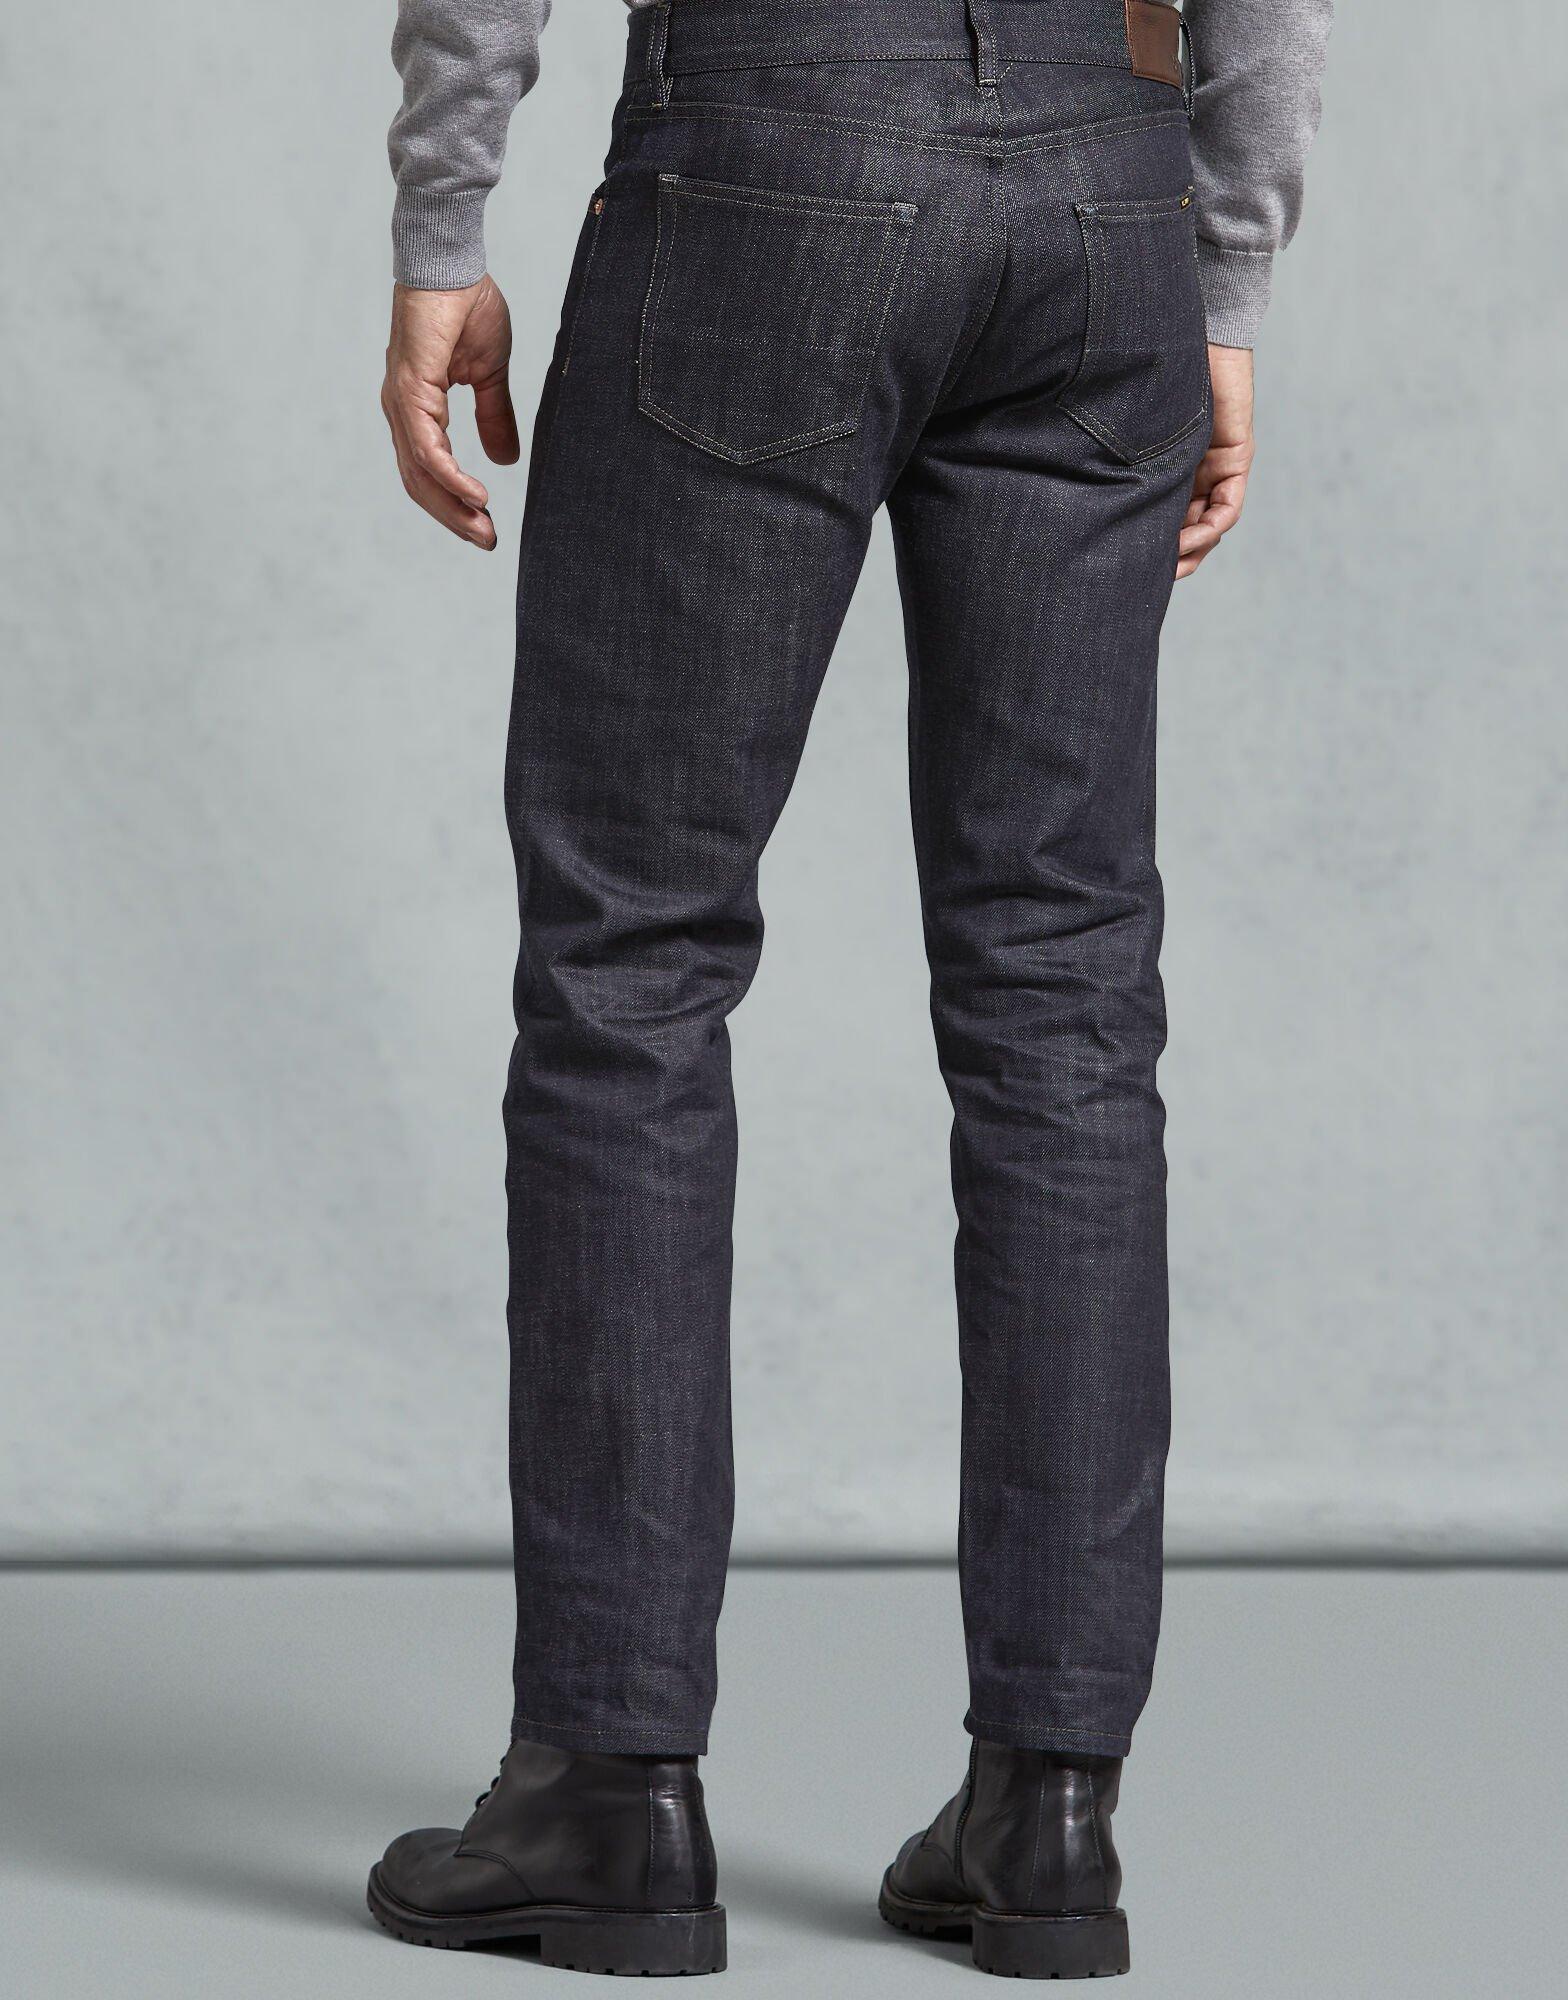 Belstaff Denim Longton Slim Jeans in Indigo (Blue) for Men - Lyst